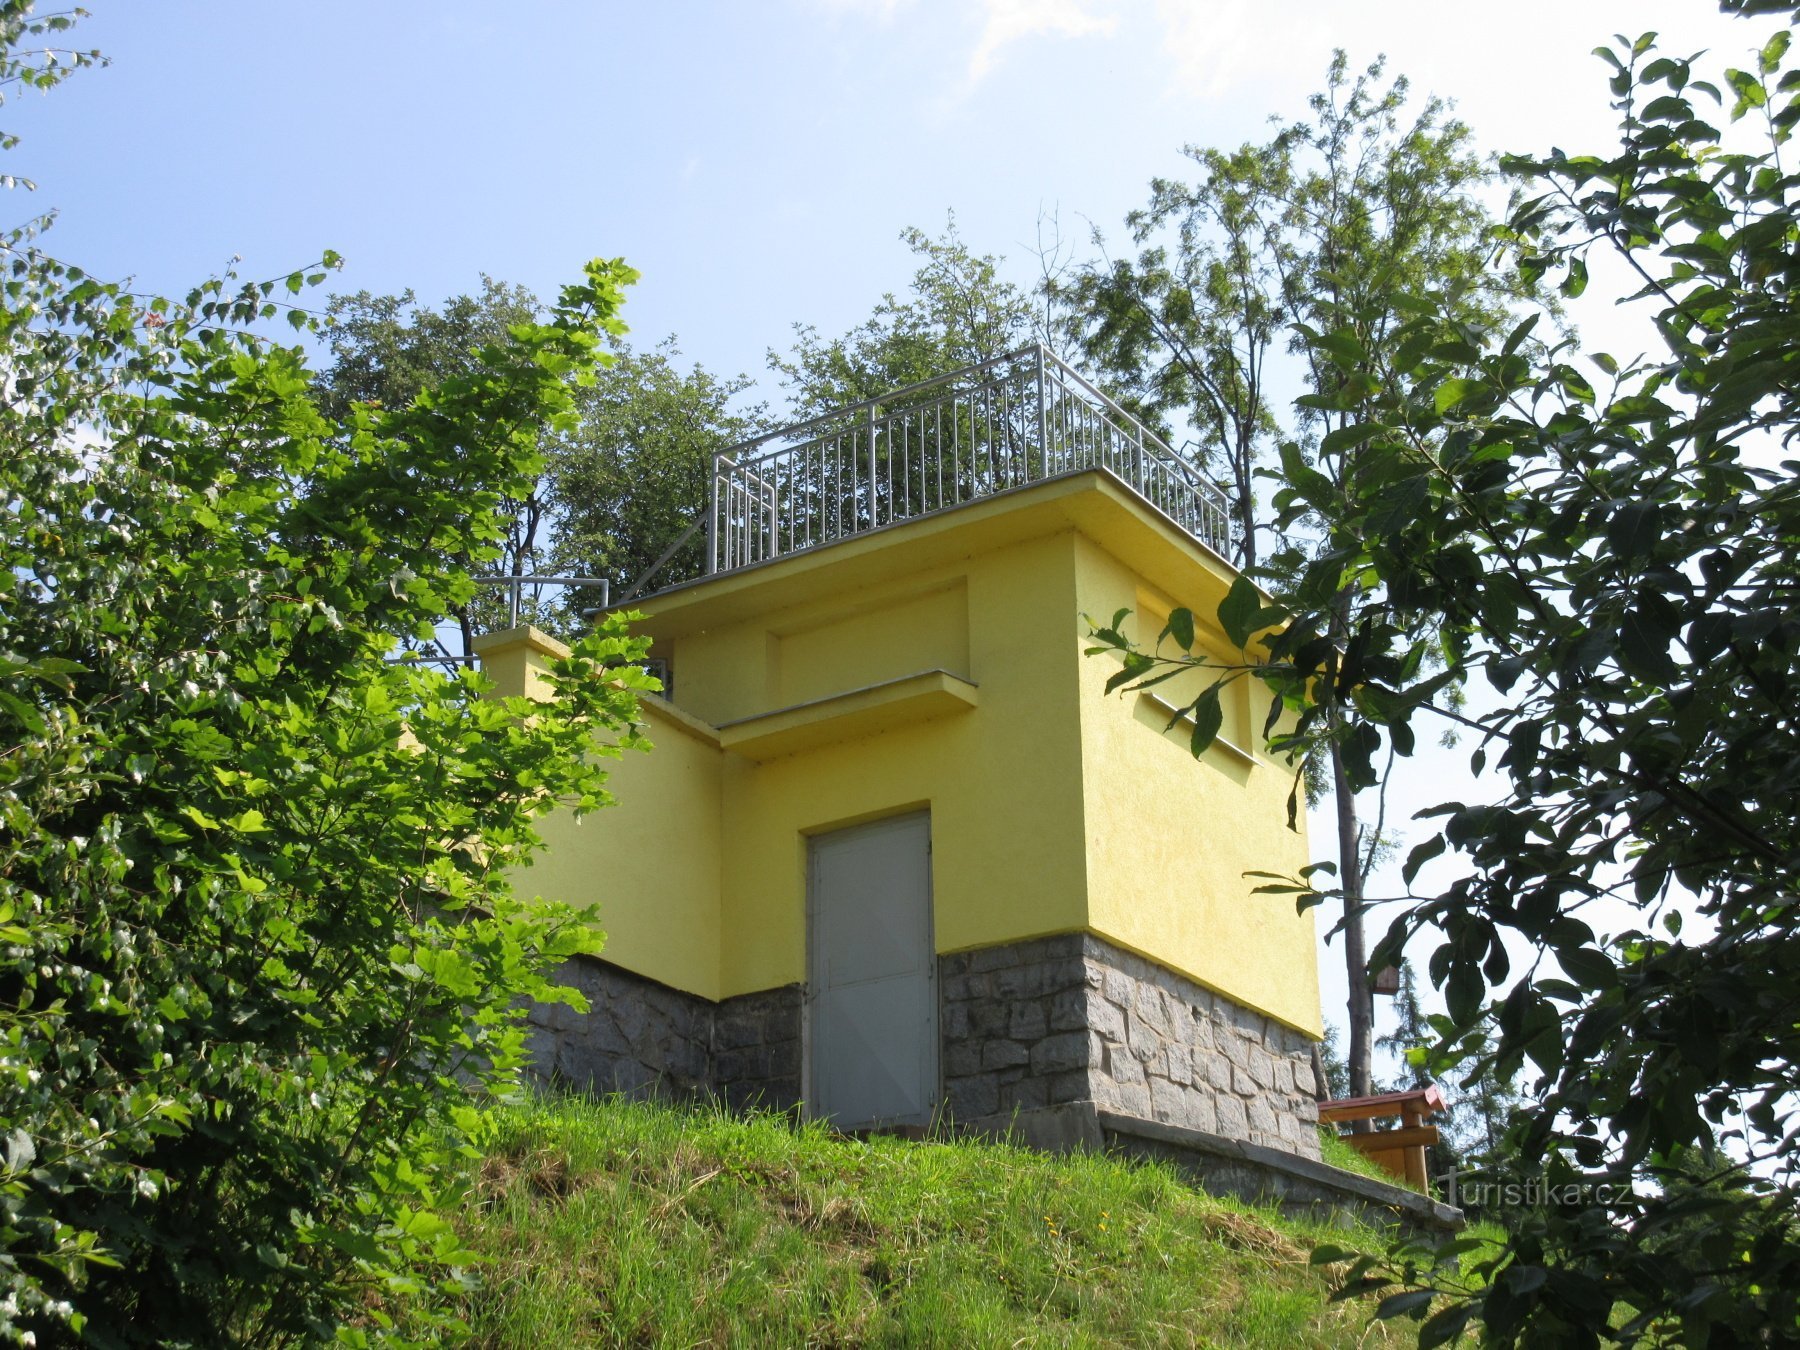 Ždírec nad Doubravau – lookout tower and Džekov Ranch microbrewery